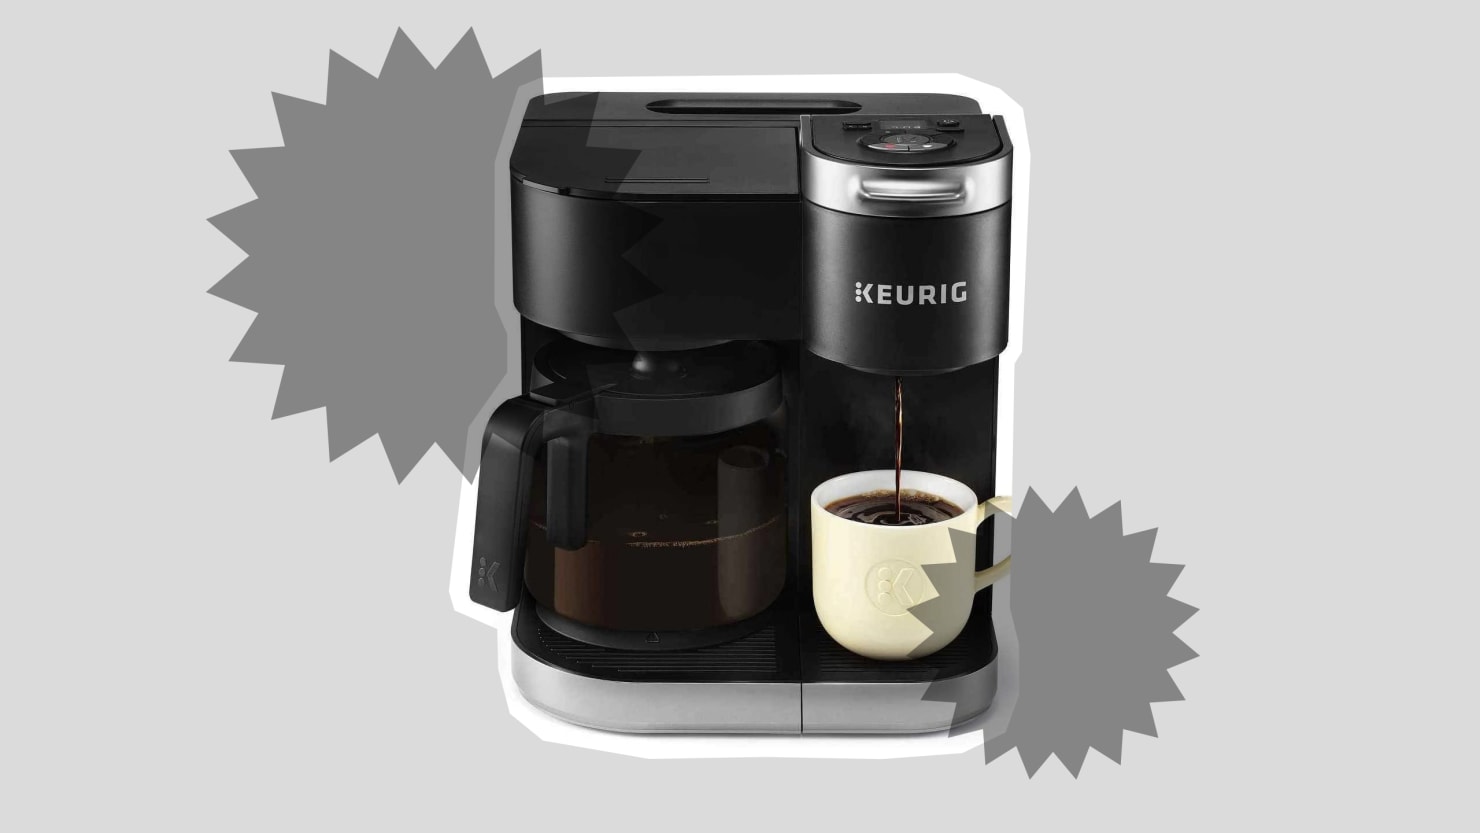 Keurig K-Duo Black Single Serve & Carafe Coffee Maker